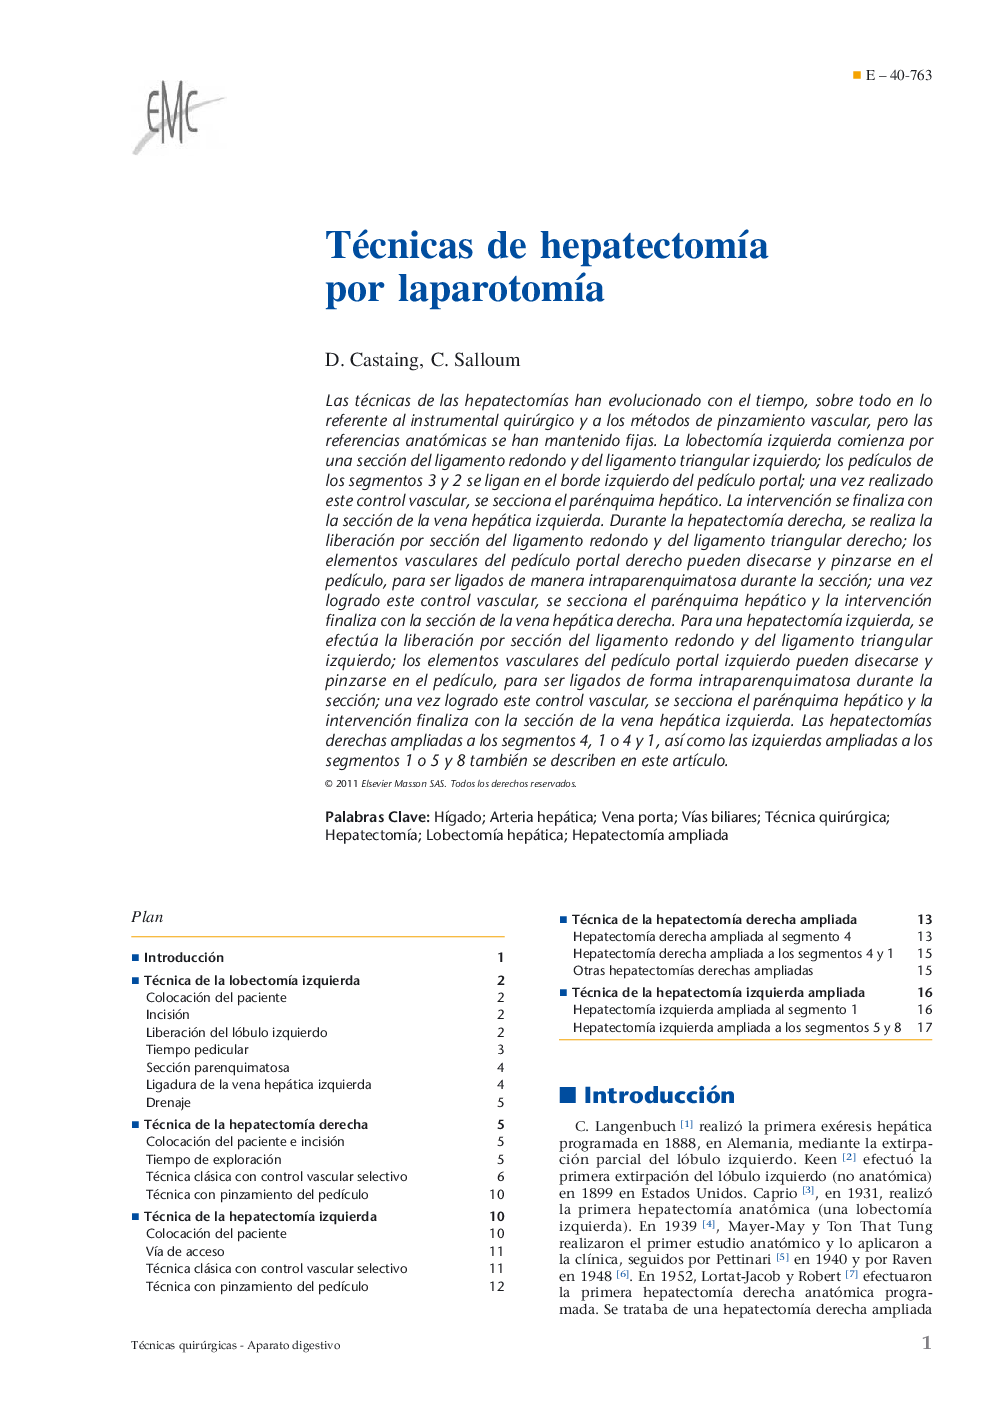 Técnicas de hepatectomía por laparotomía